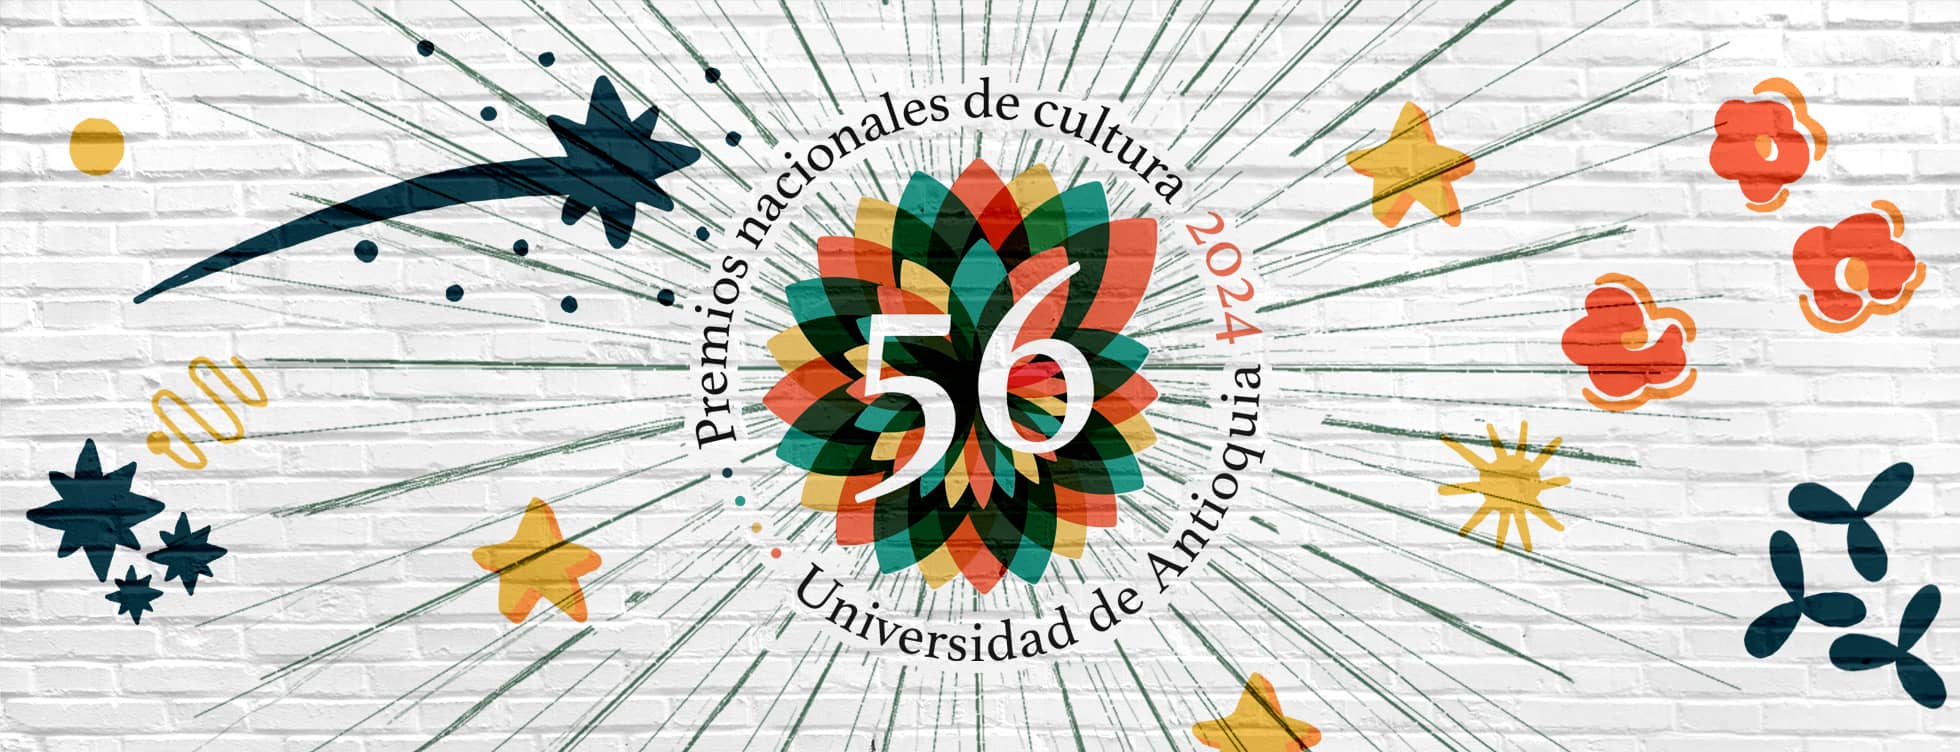 56º Premios Nacionales de Cultura Universidad de Antioquia 